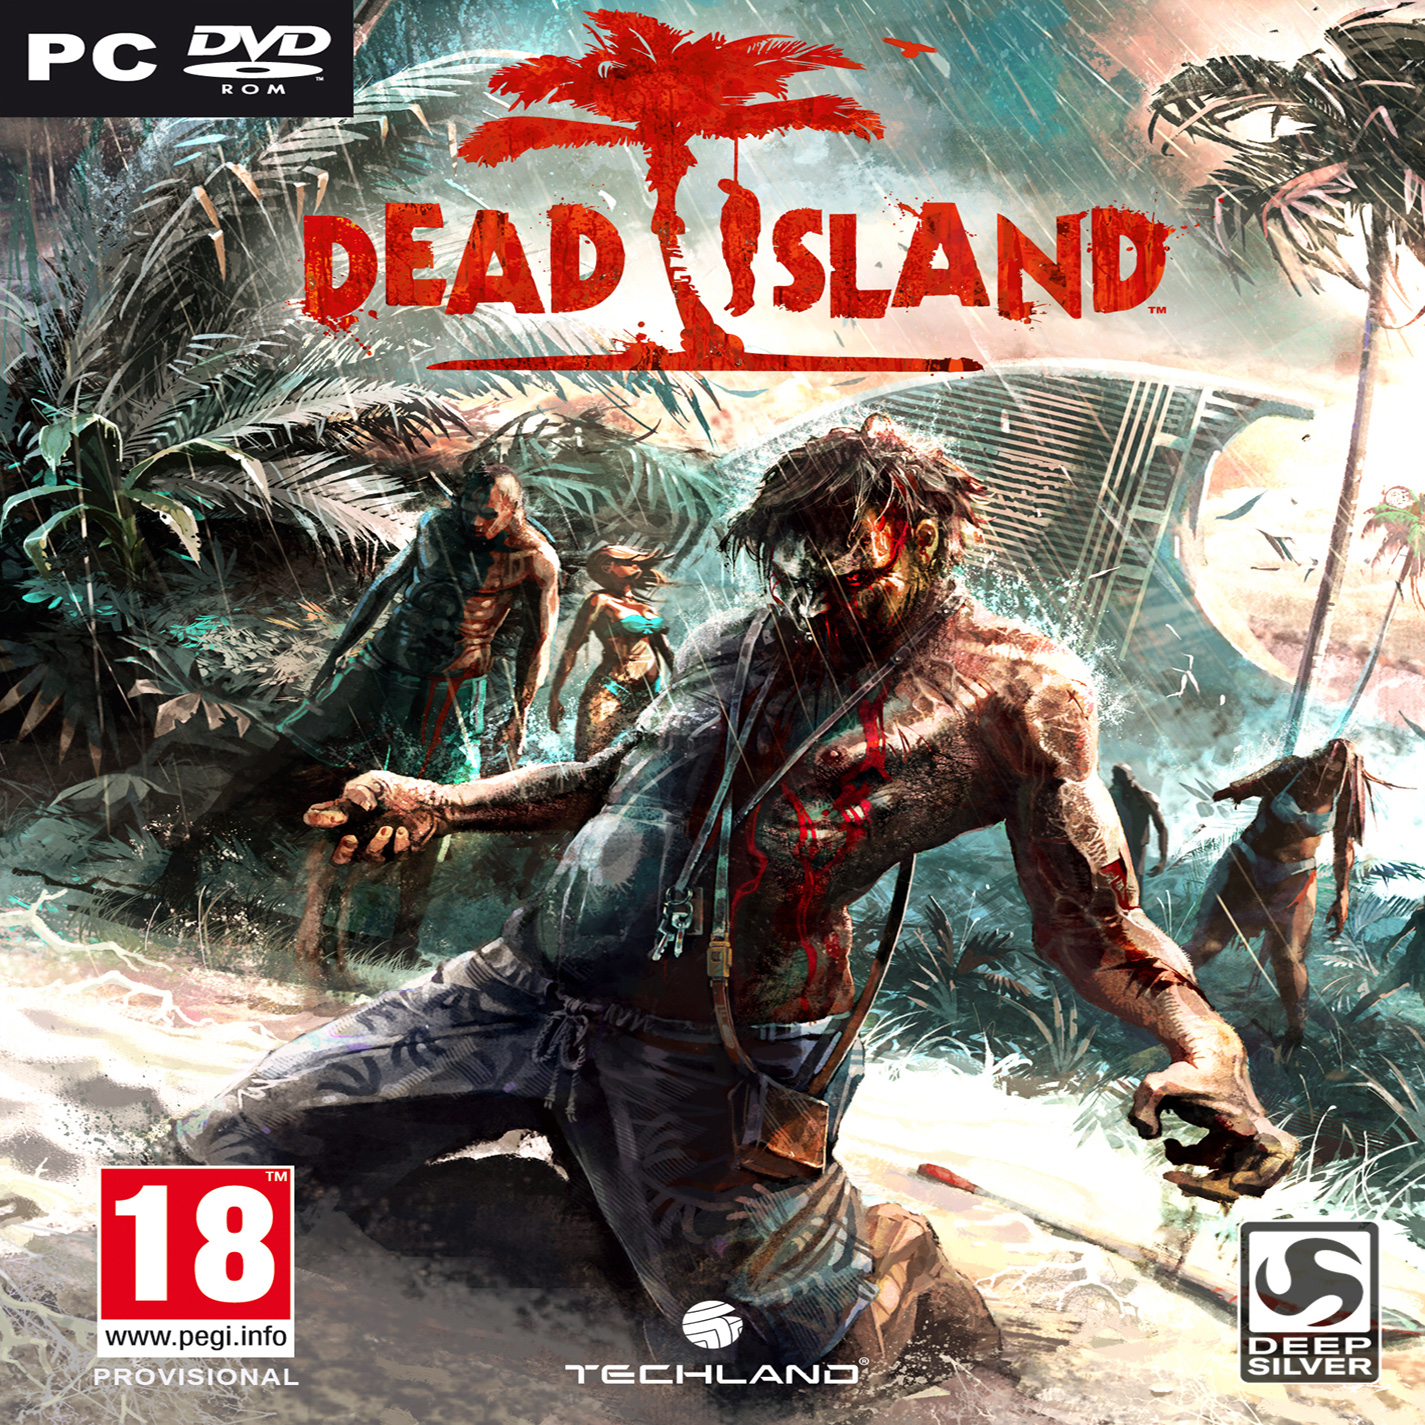 Dead Island - pedn CD obal